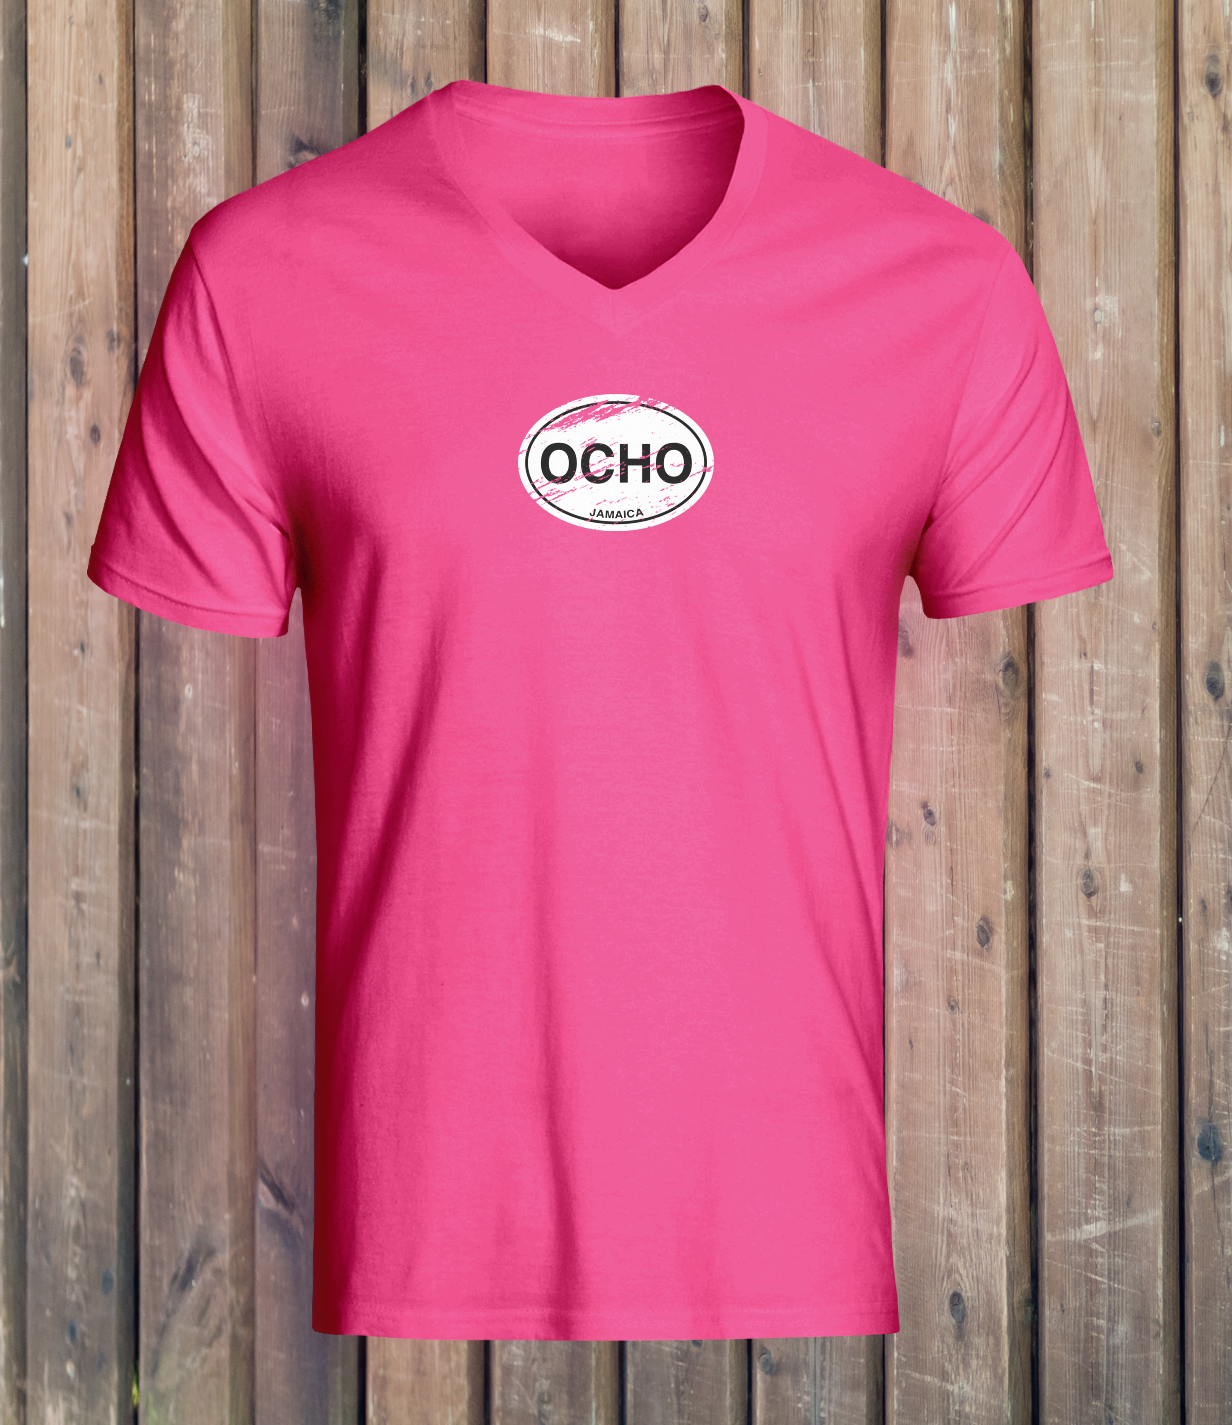 Ocho Rios Women's Classic V-Neck T-Shirts - My Destination Location